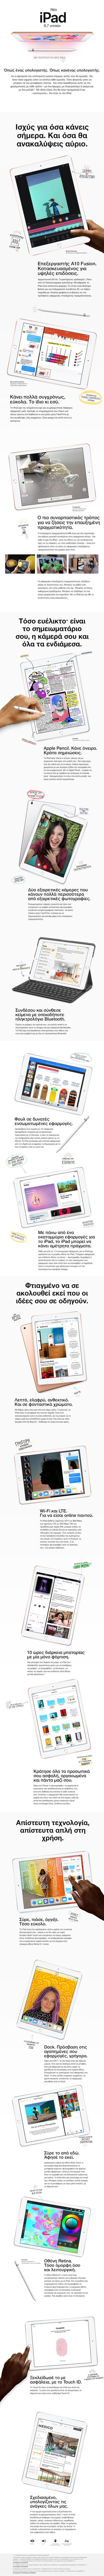 iPad_new_9.7